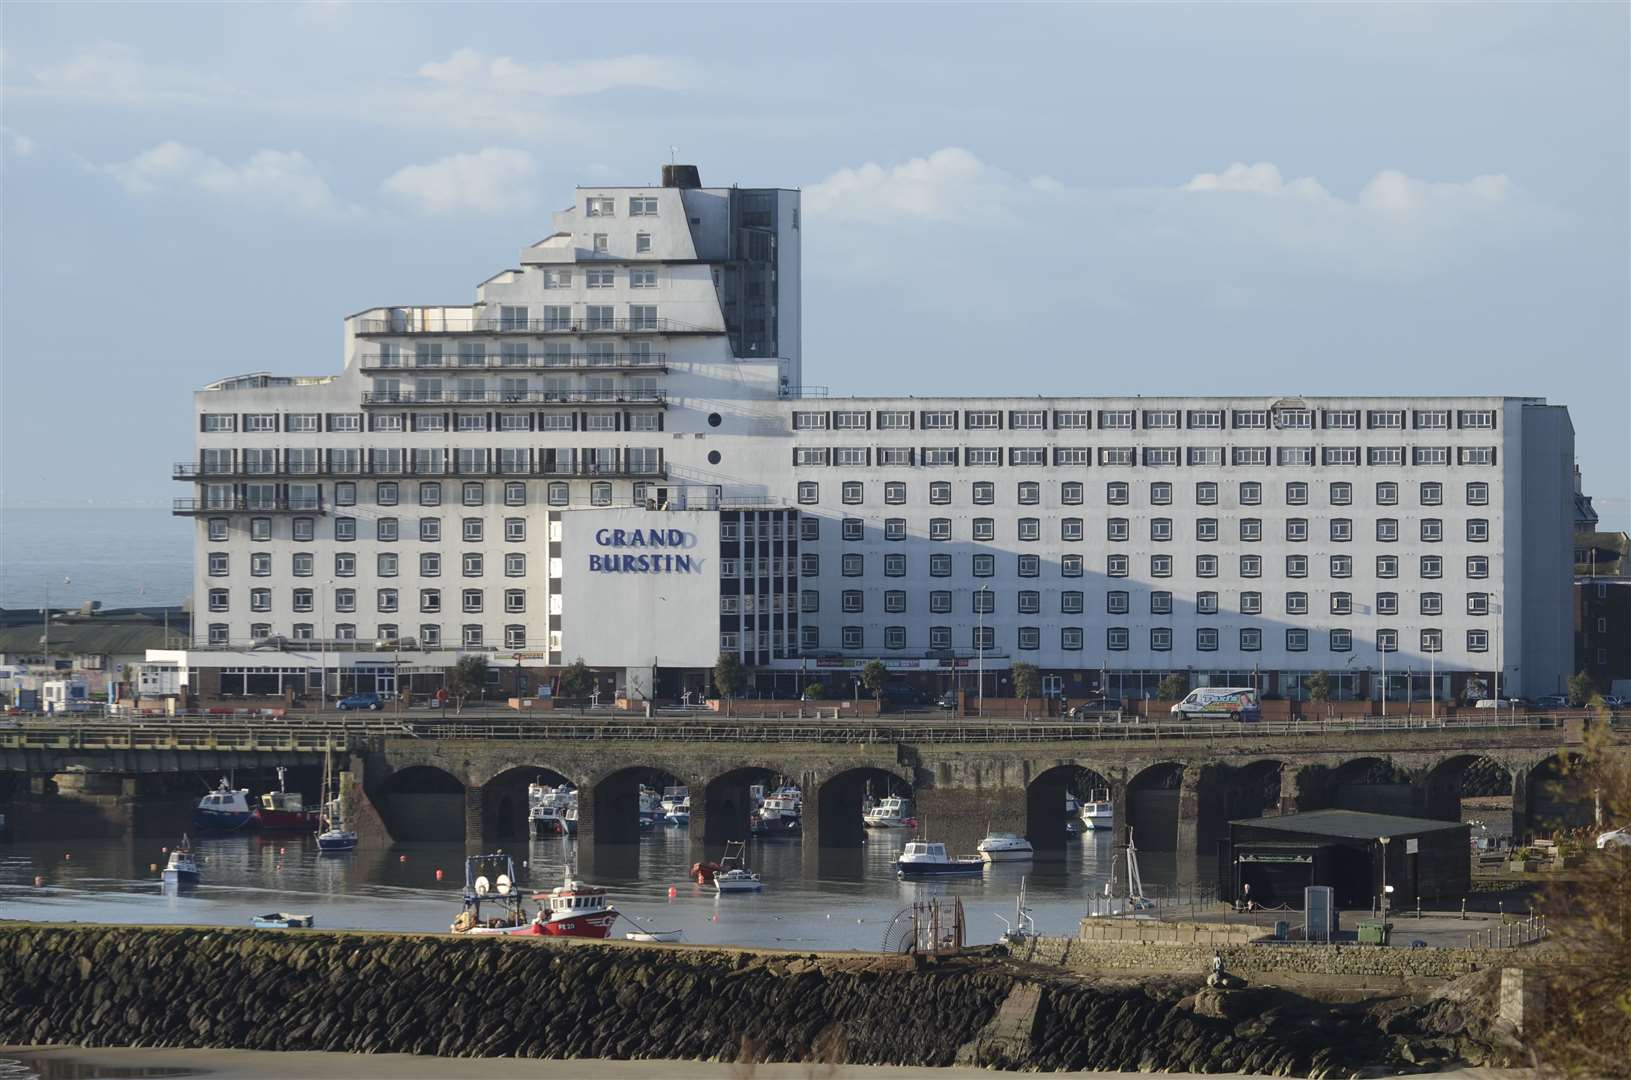 The Grand Burstin hotel pictured in 2014